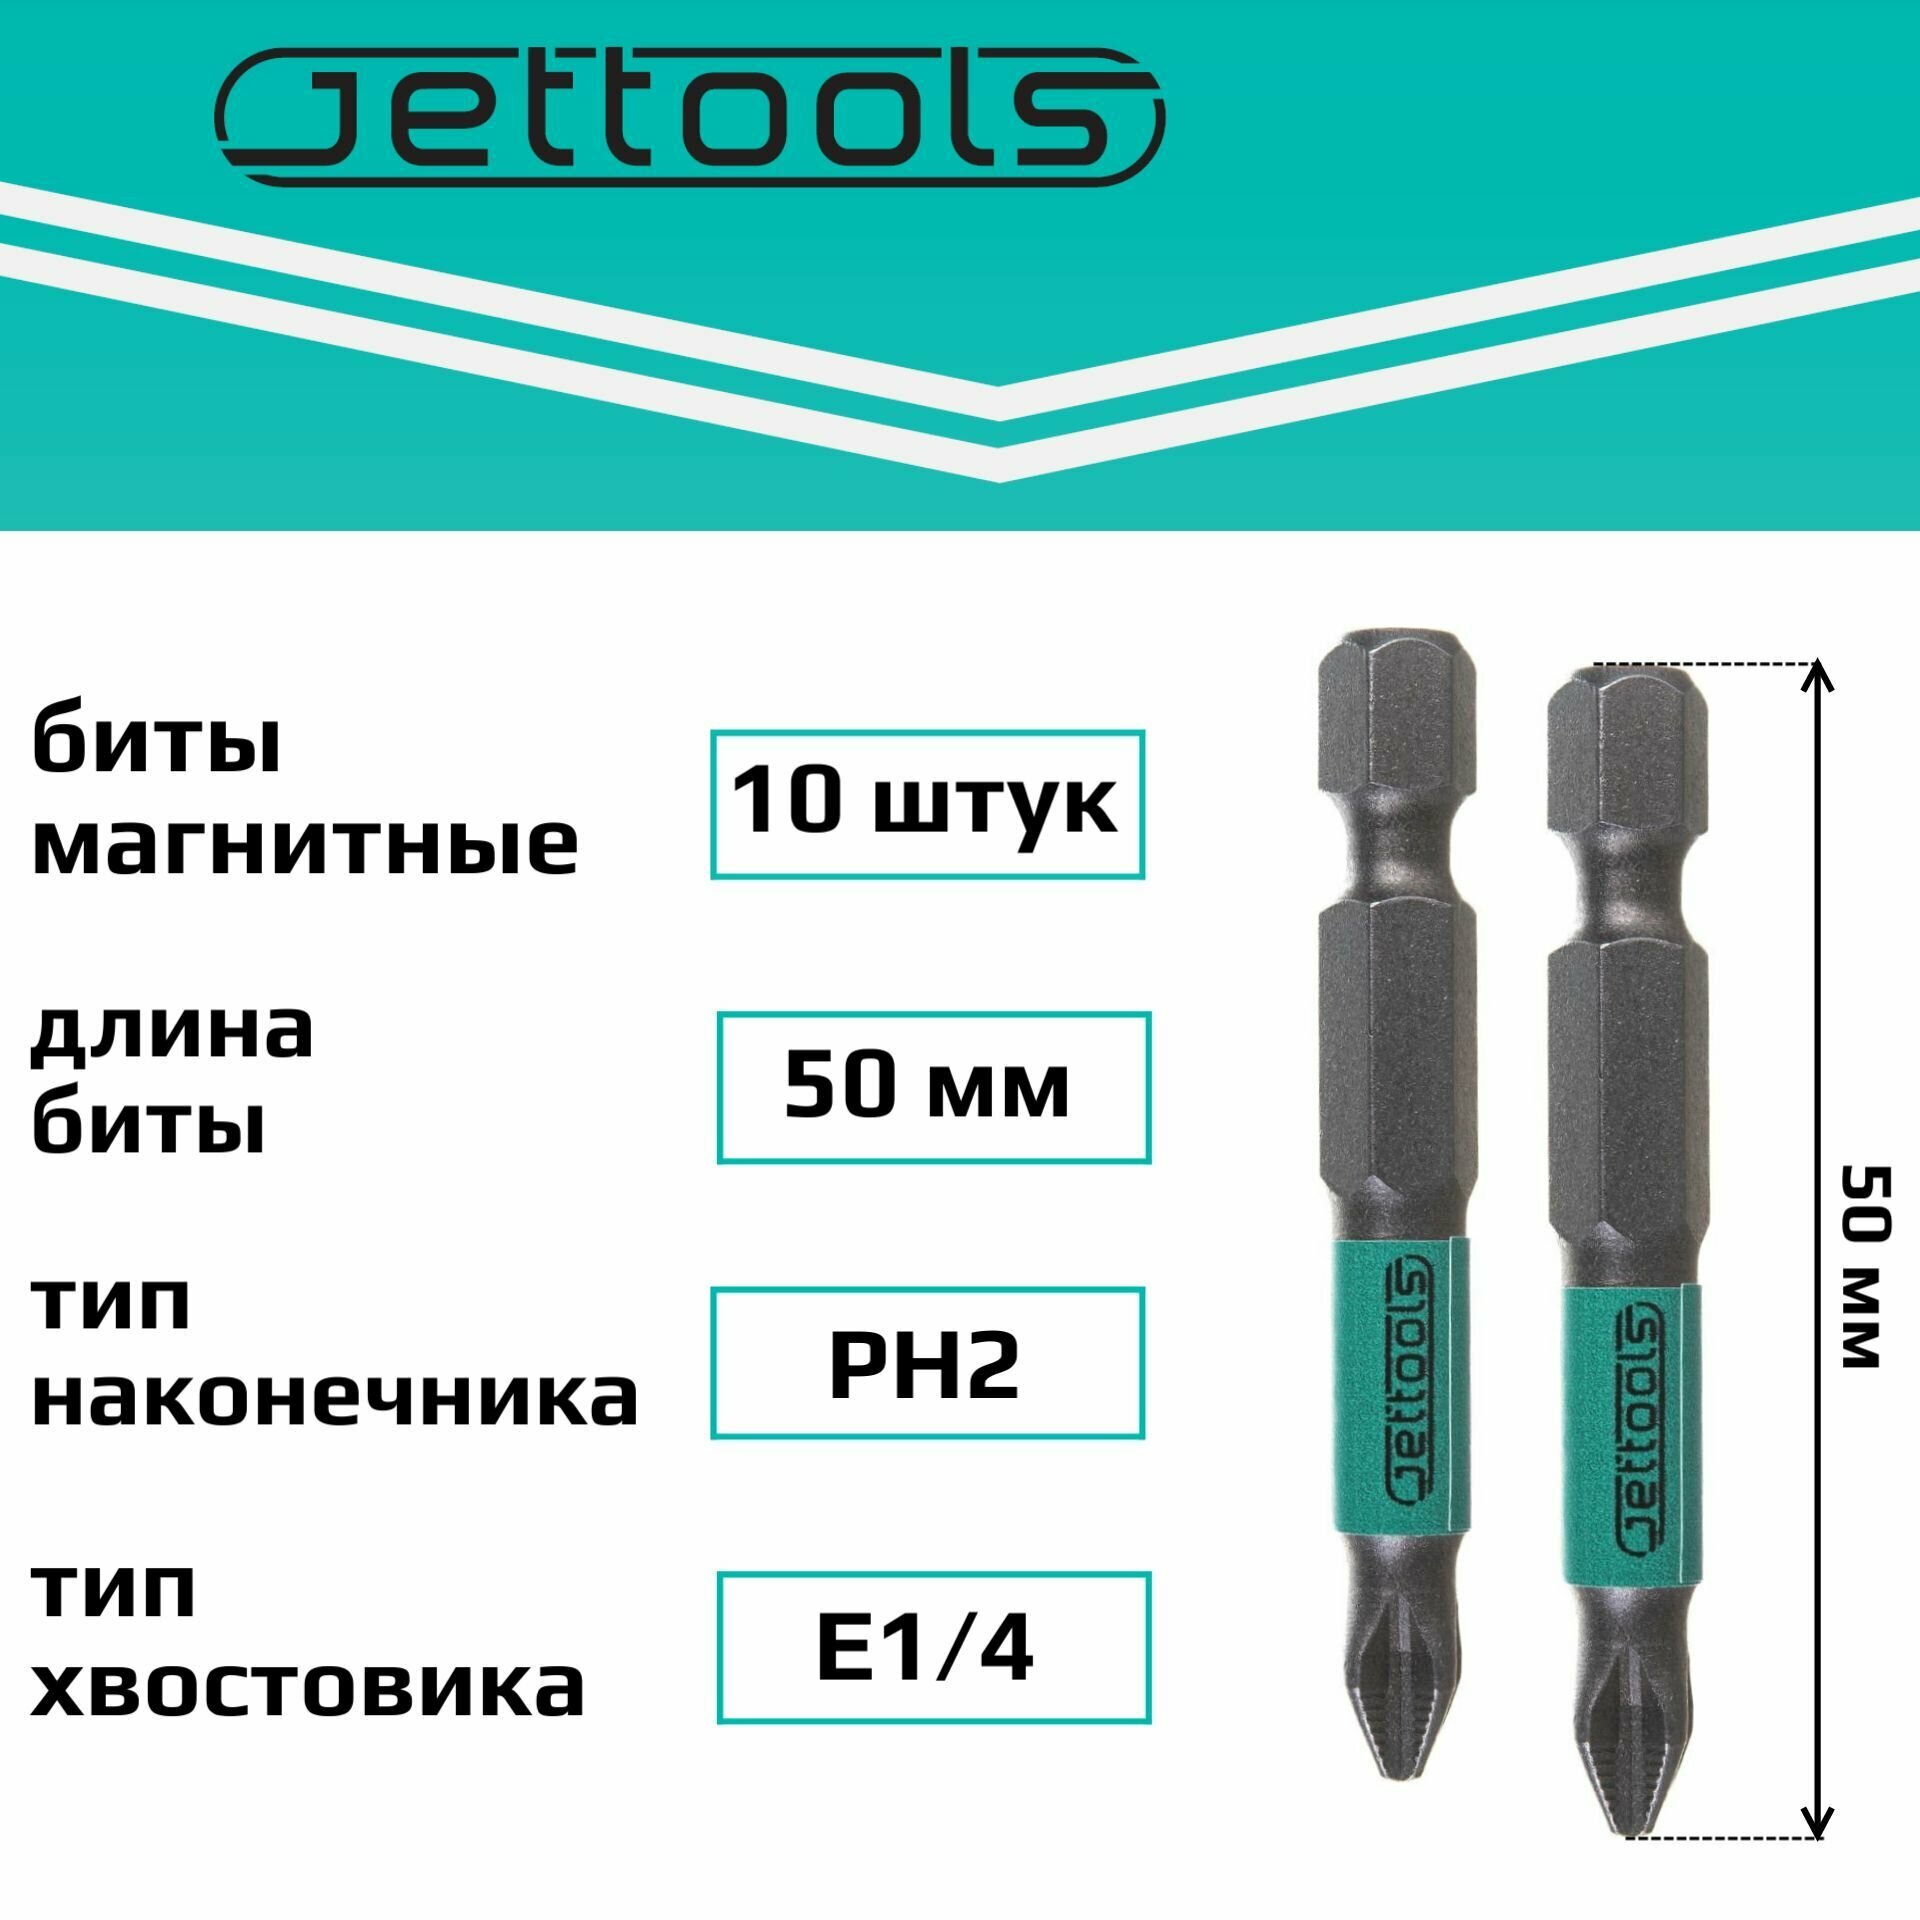 Бита PH2 50 мм Jettools магнитные для шуруповерта для больших нагрузок, 10 штук